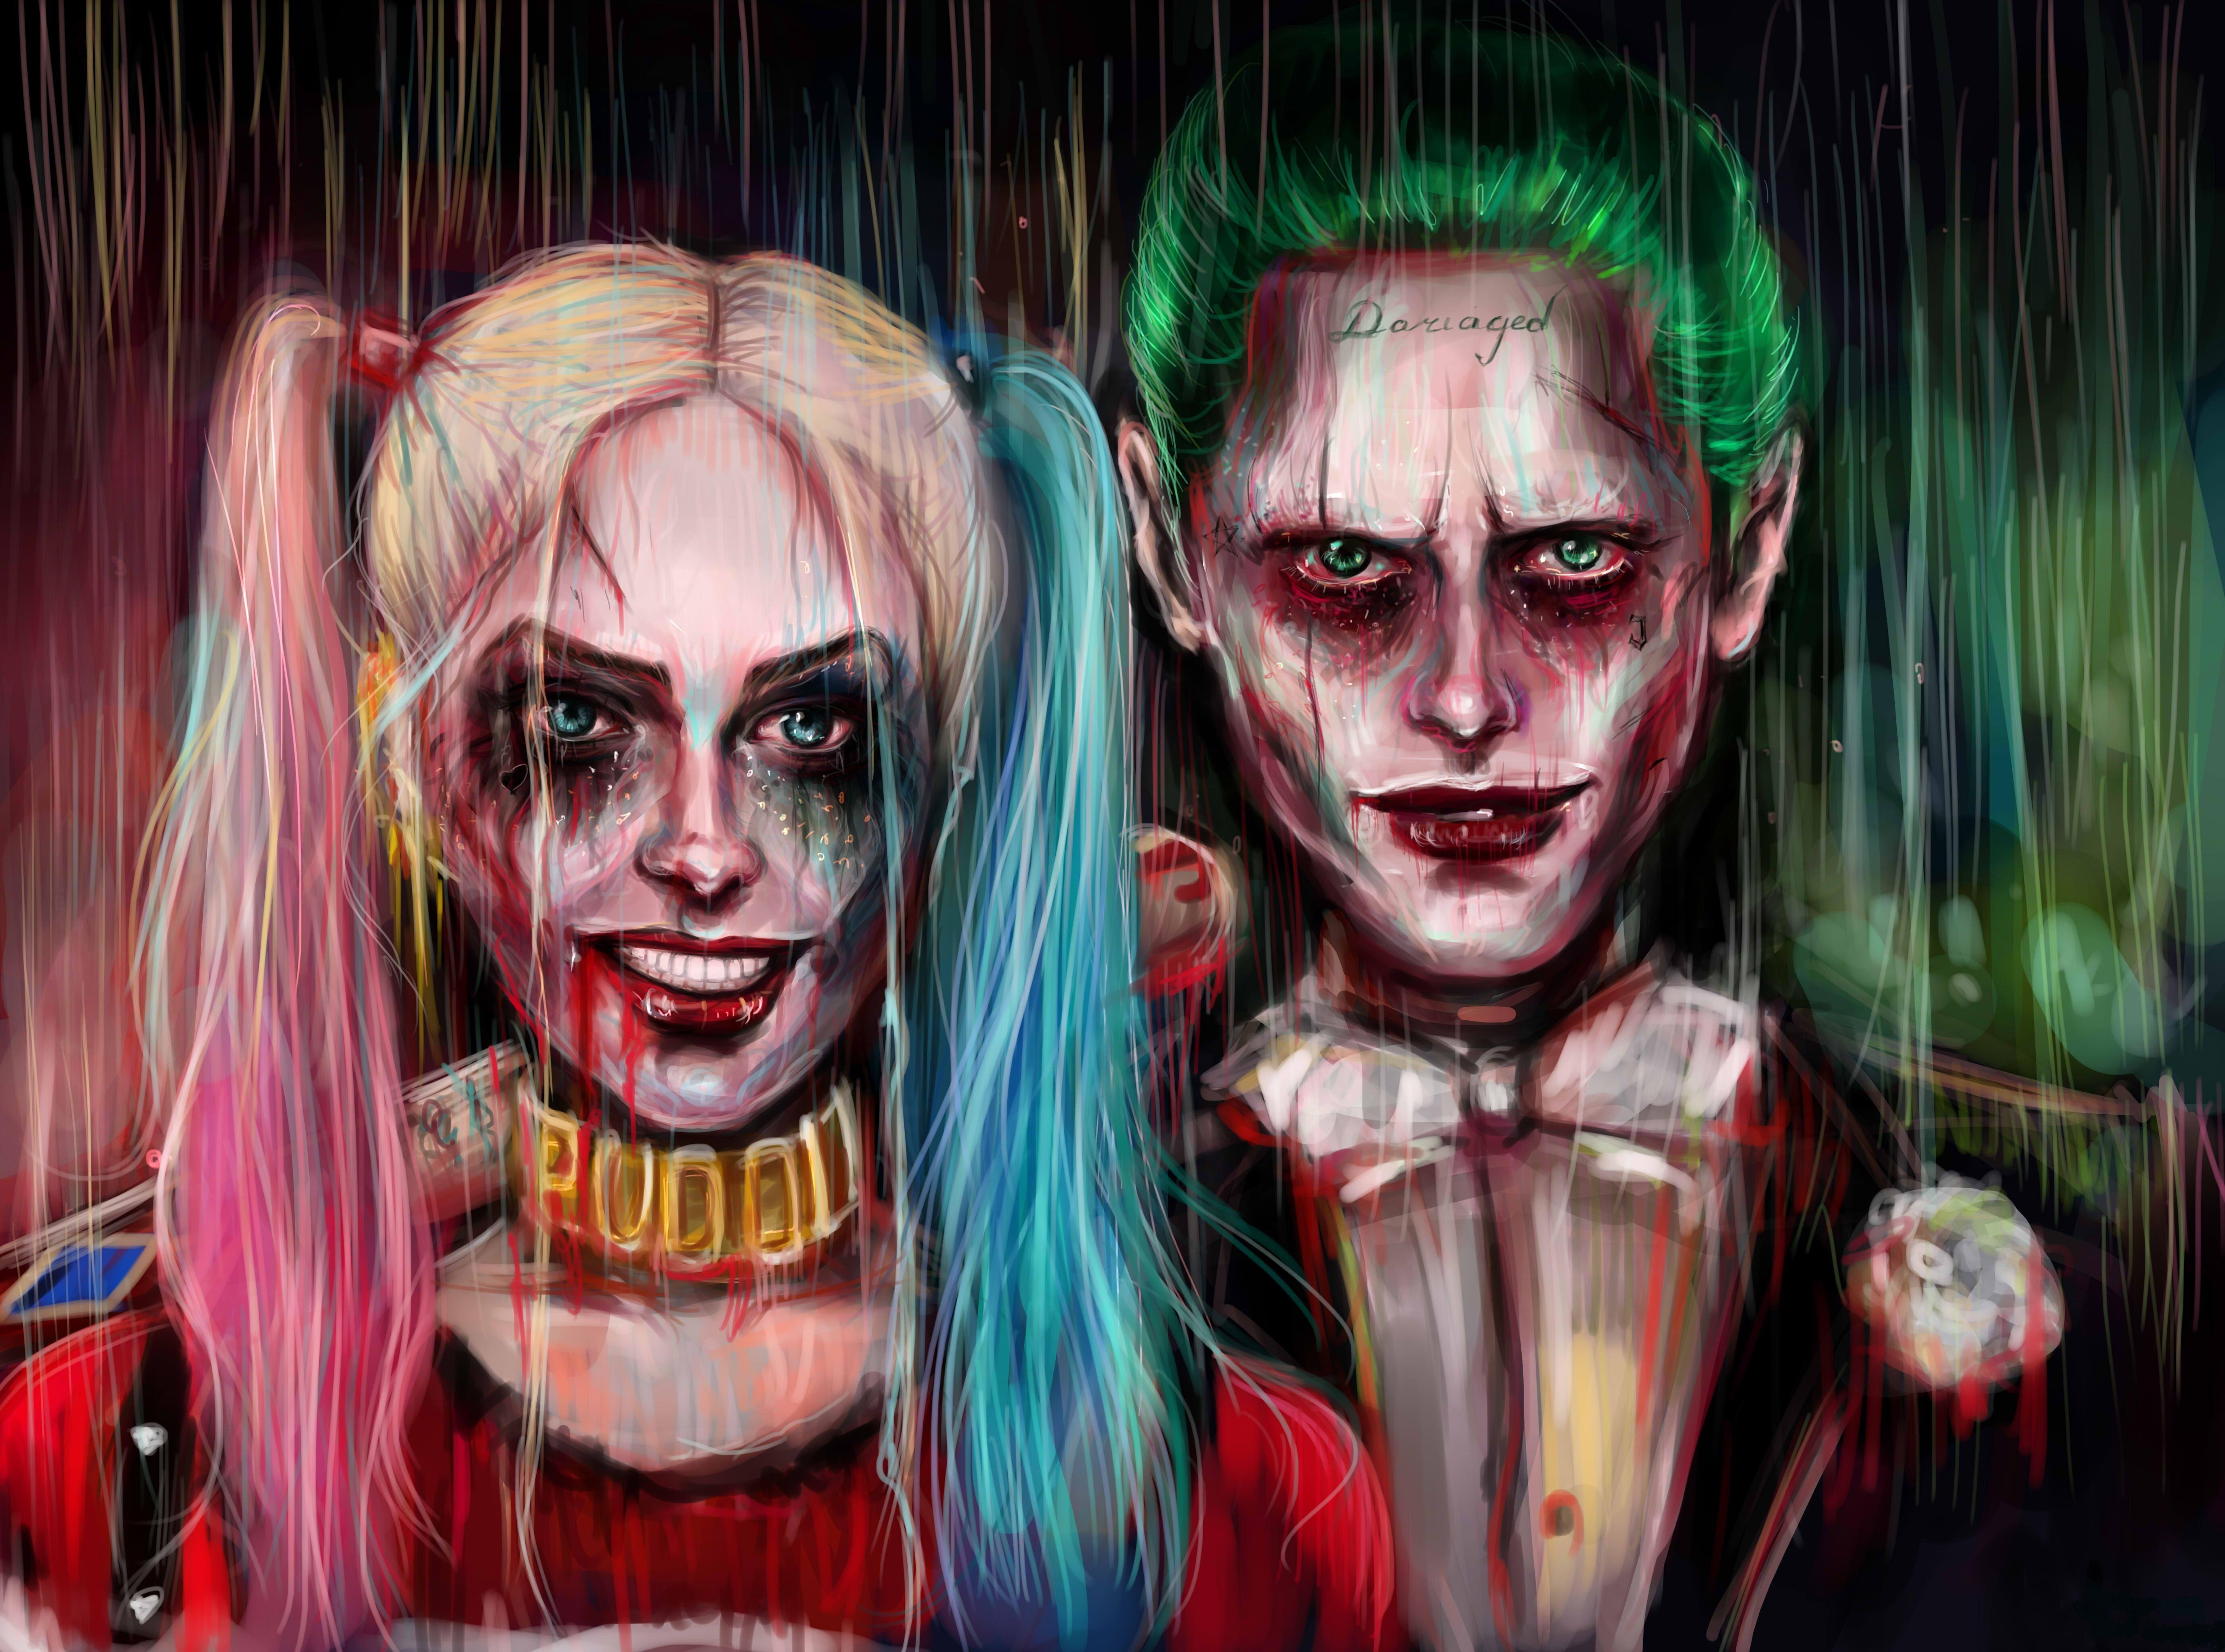 Joker And Harley Quinn Wallpapers Top Free Joker And